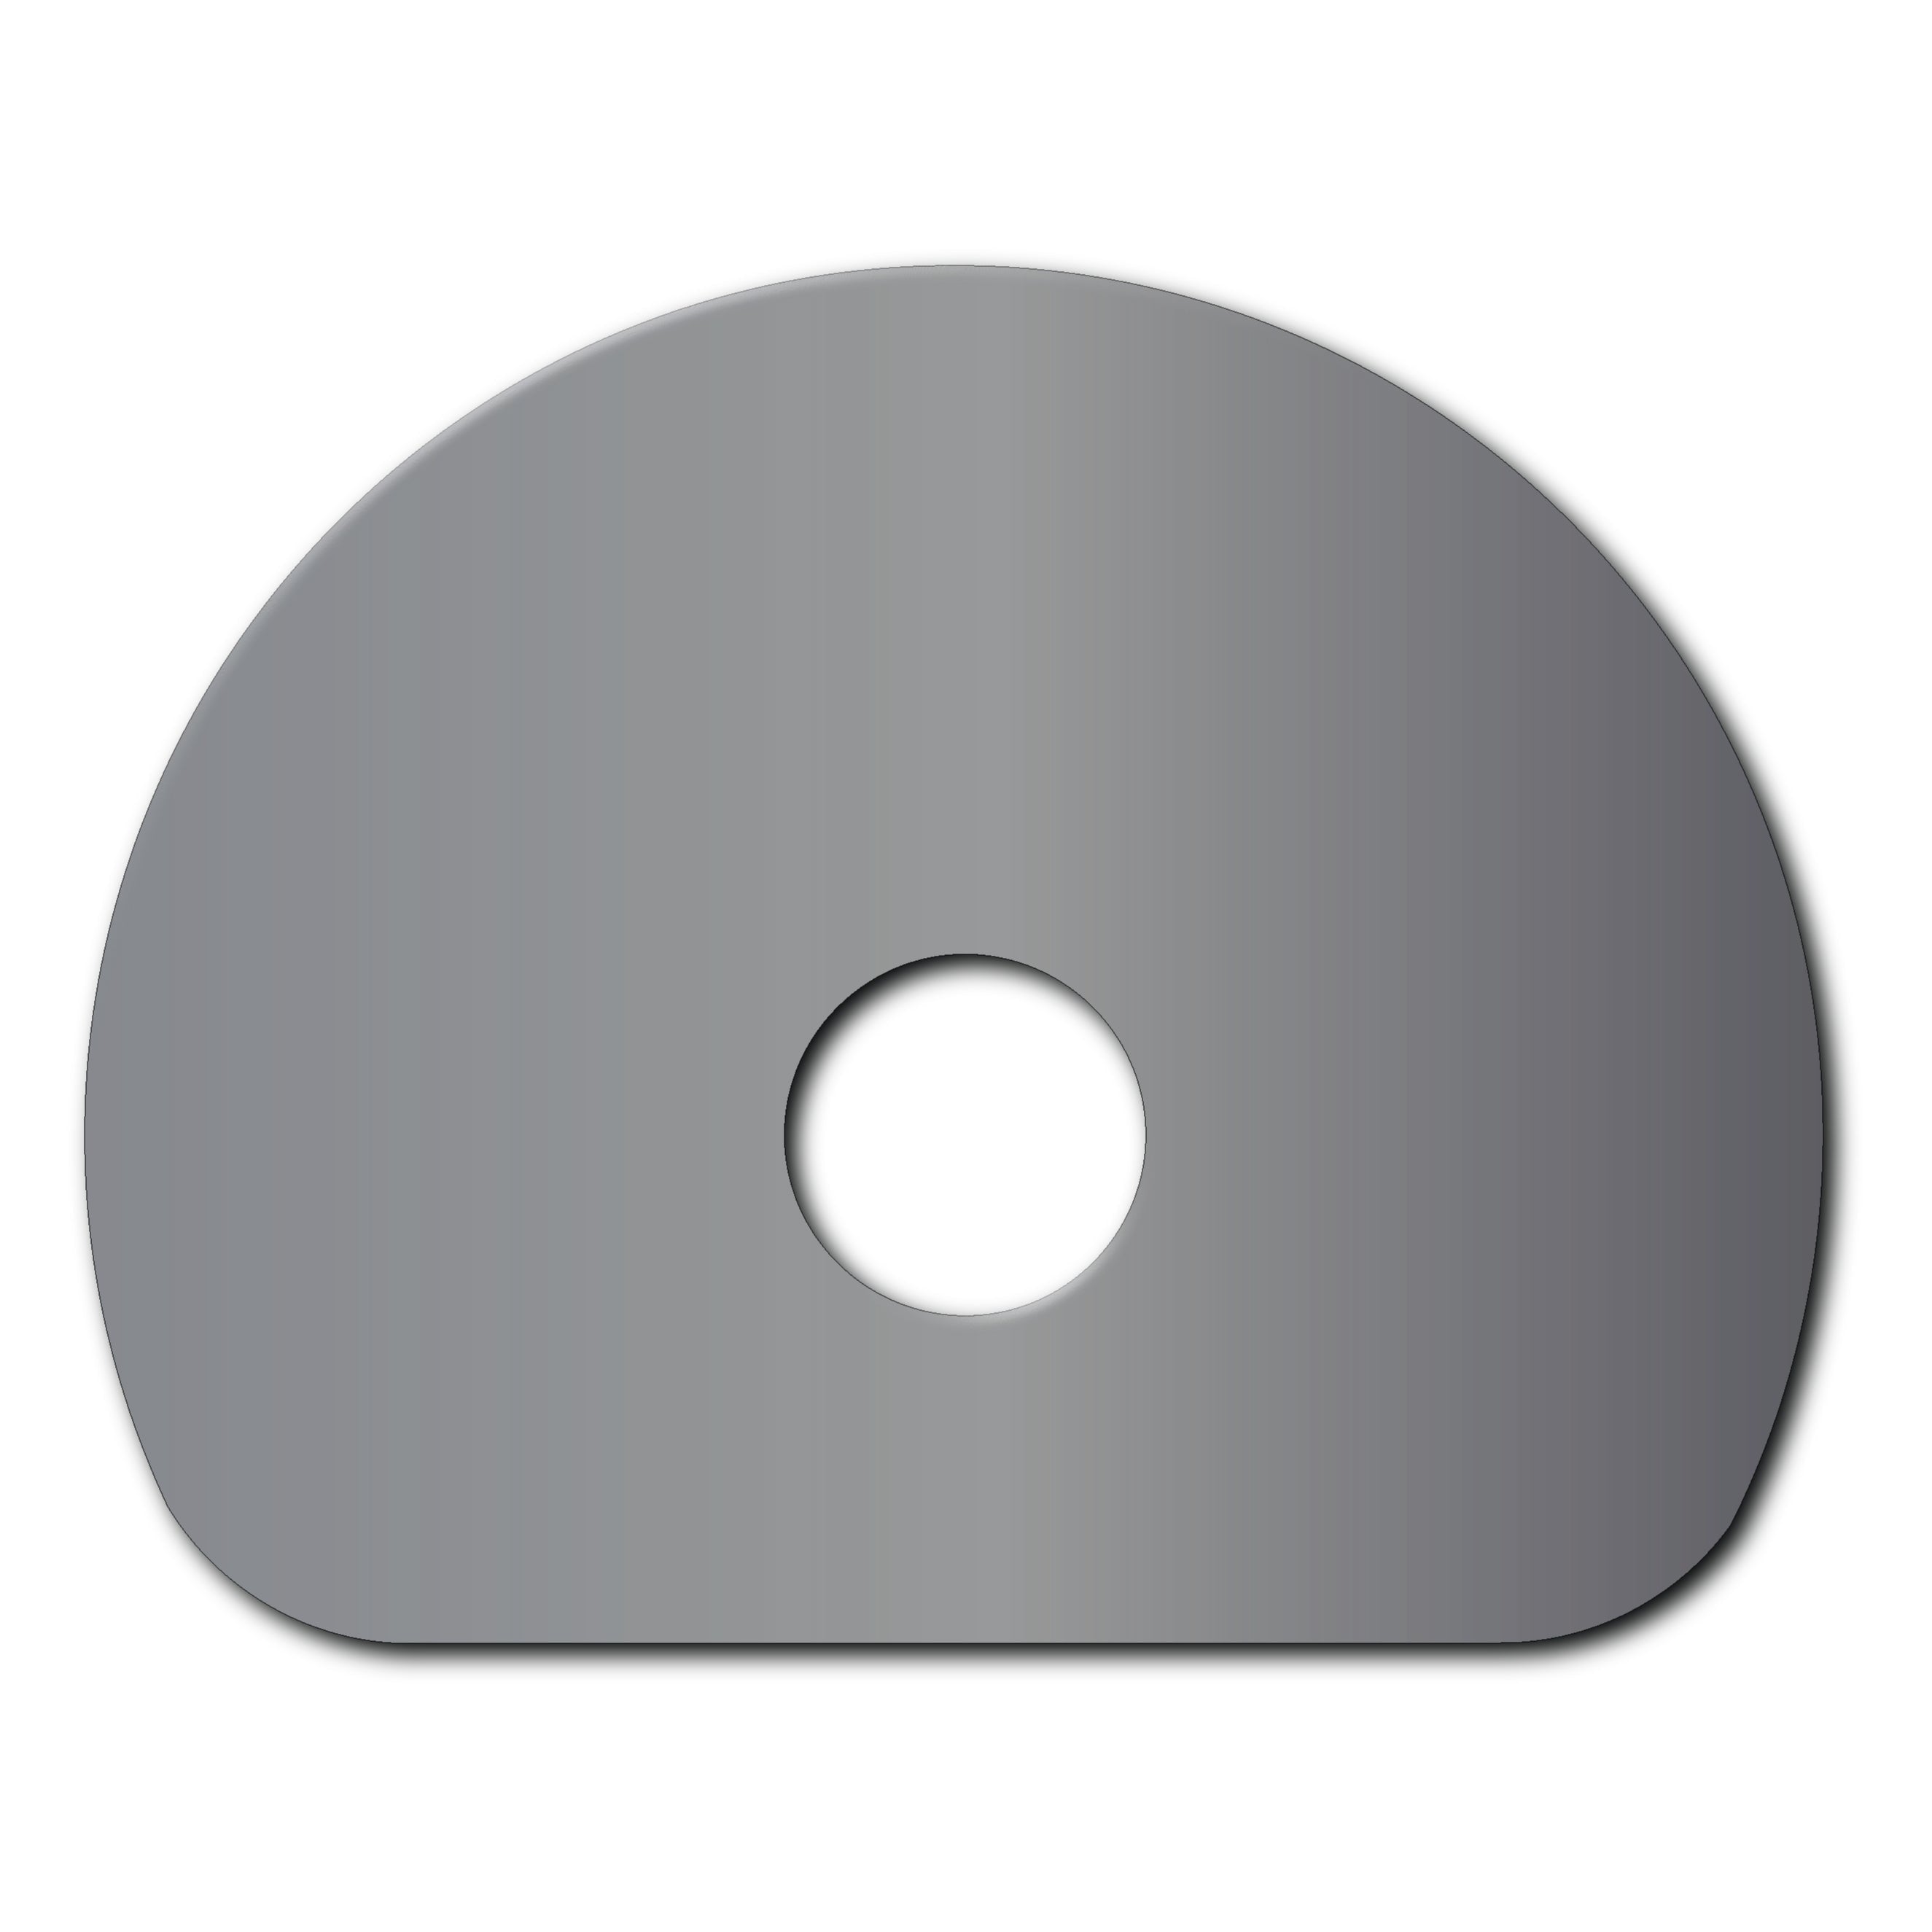 Semi-Circle Carbide Insert Cutter 70-815 by Rikon